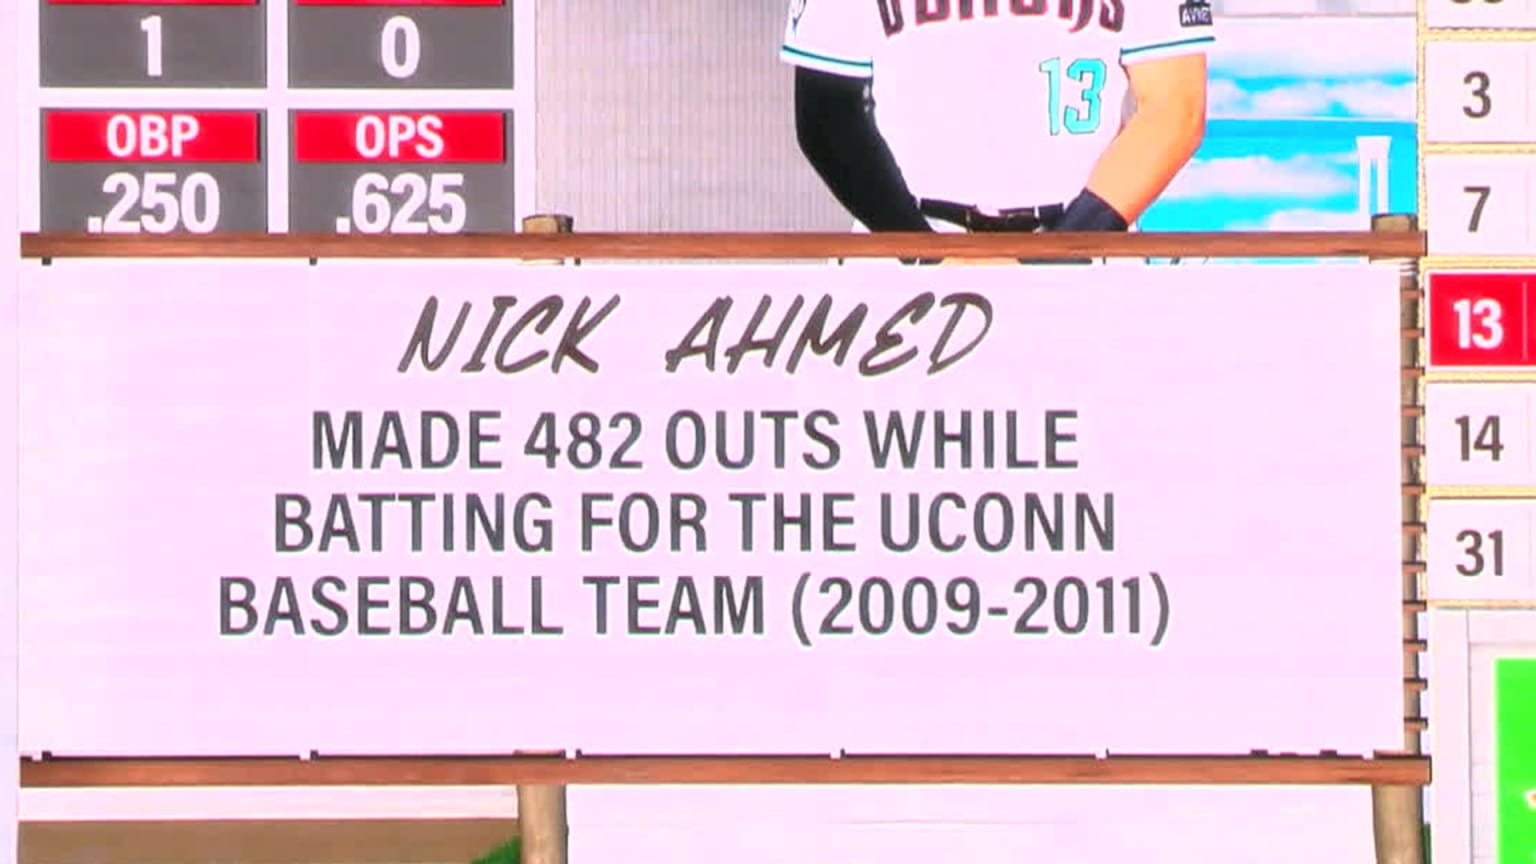 A screenshot of a scoreboard showing a fact about Nick Ahmed